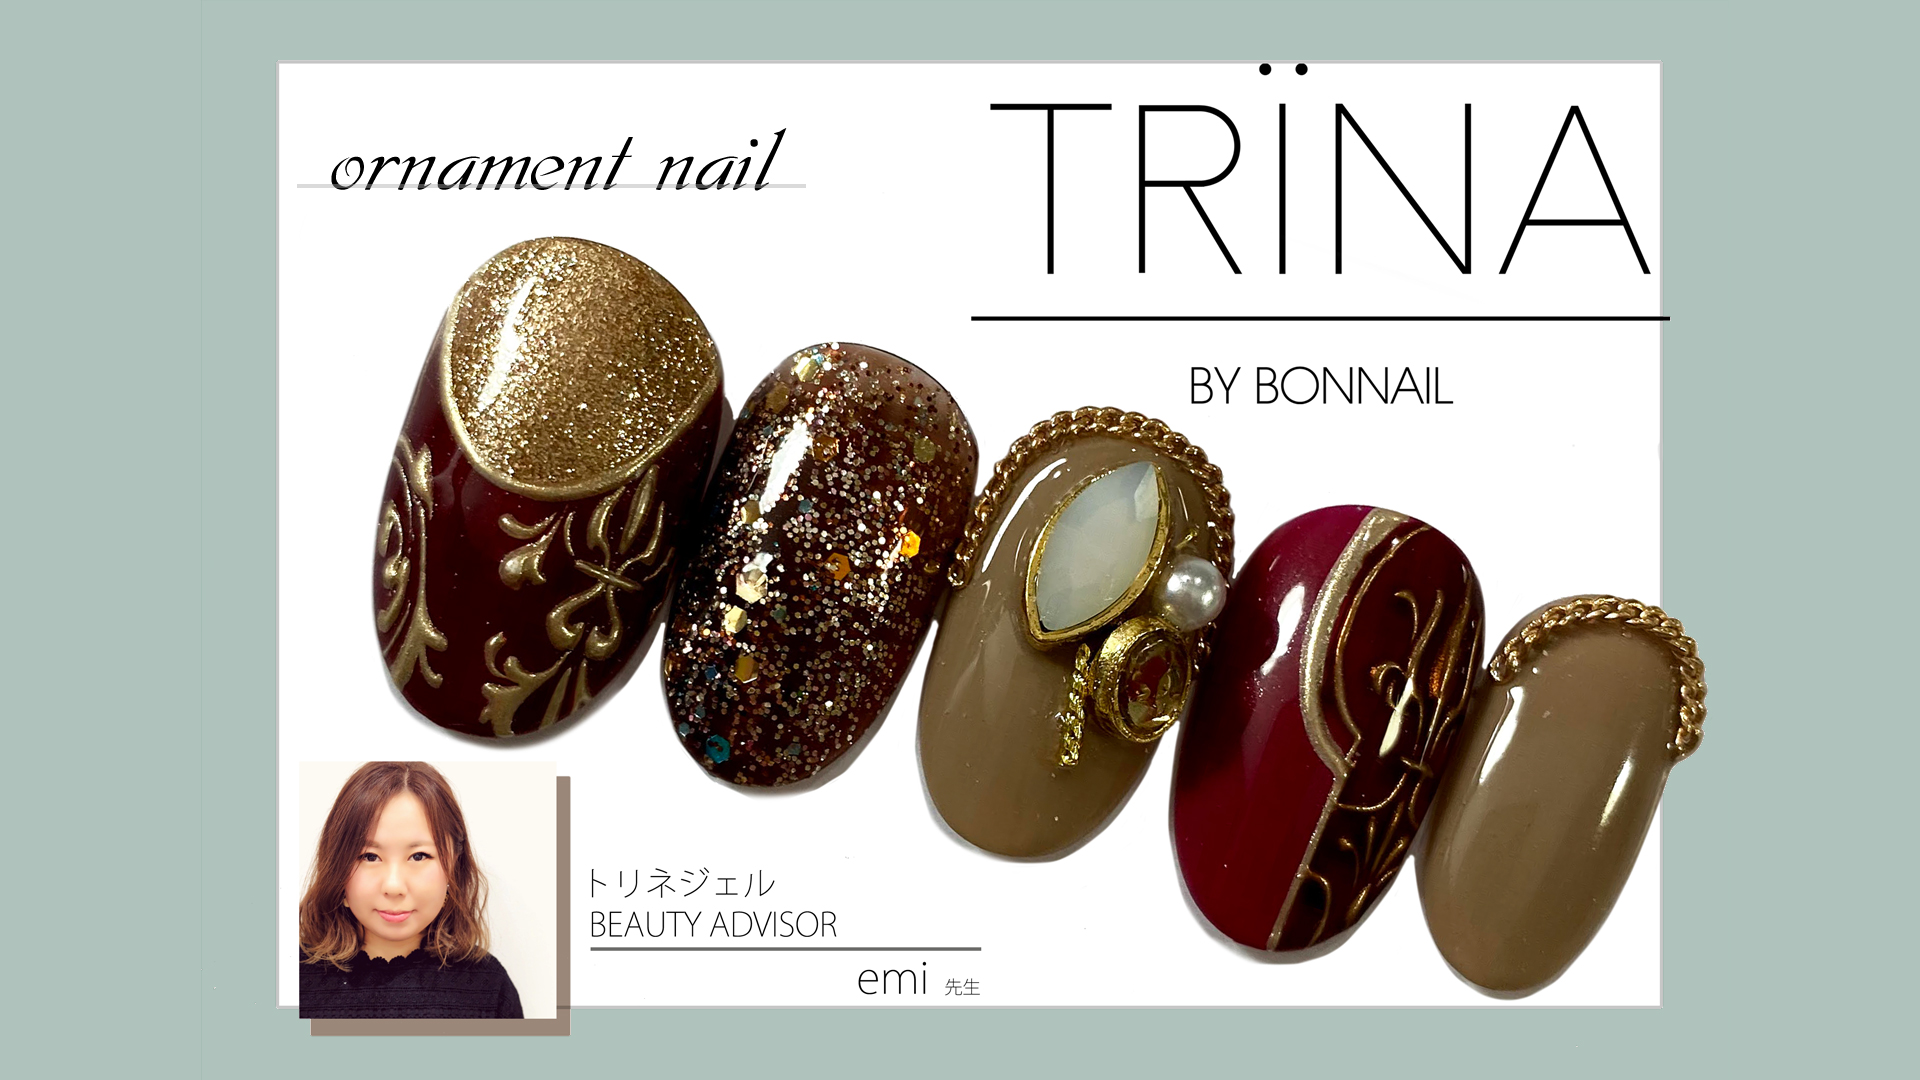 【10】株式会社TAT TRINA BEAUTY ADVIZOR emi先生／Ornament nail